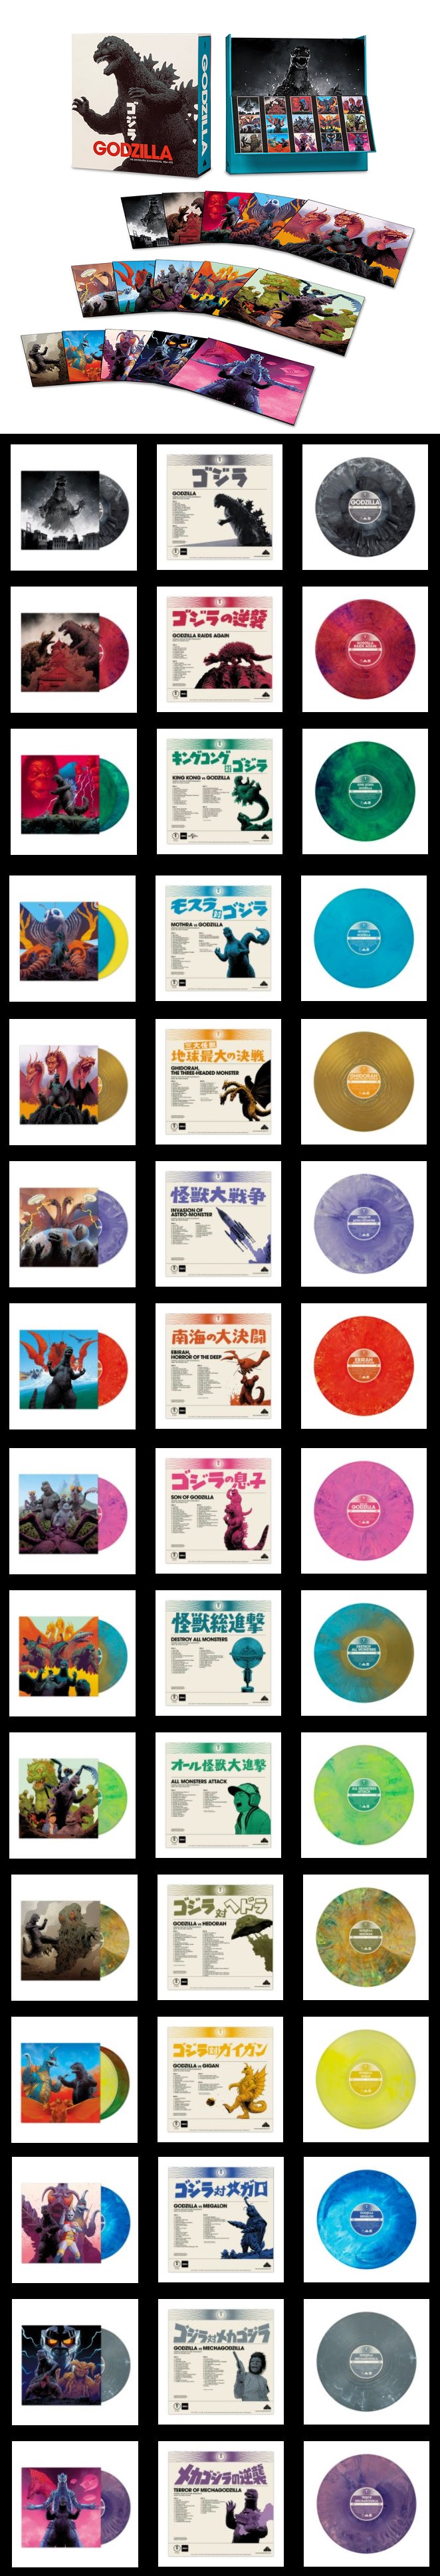 Waxwork Godzilla: The Showa Era Soundtracks, 1954-1975